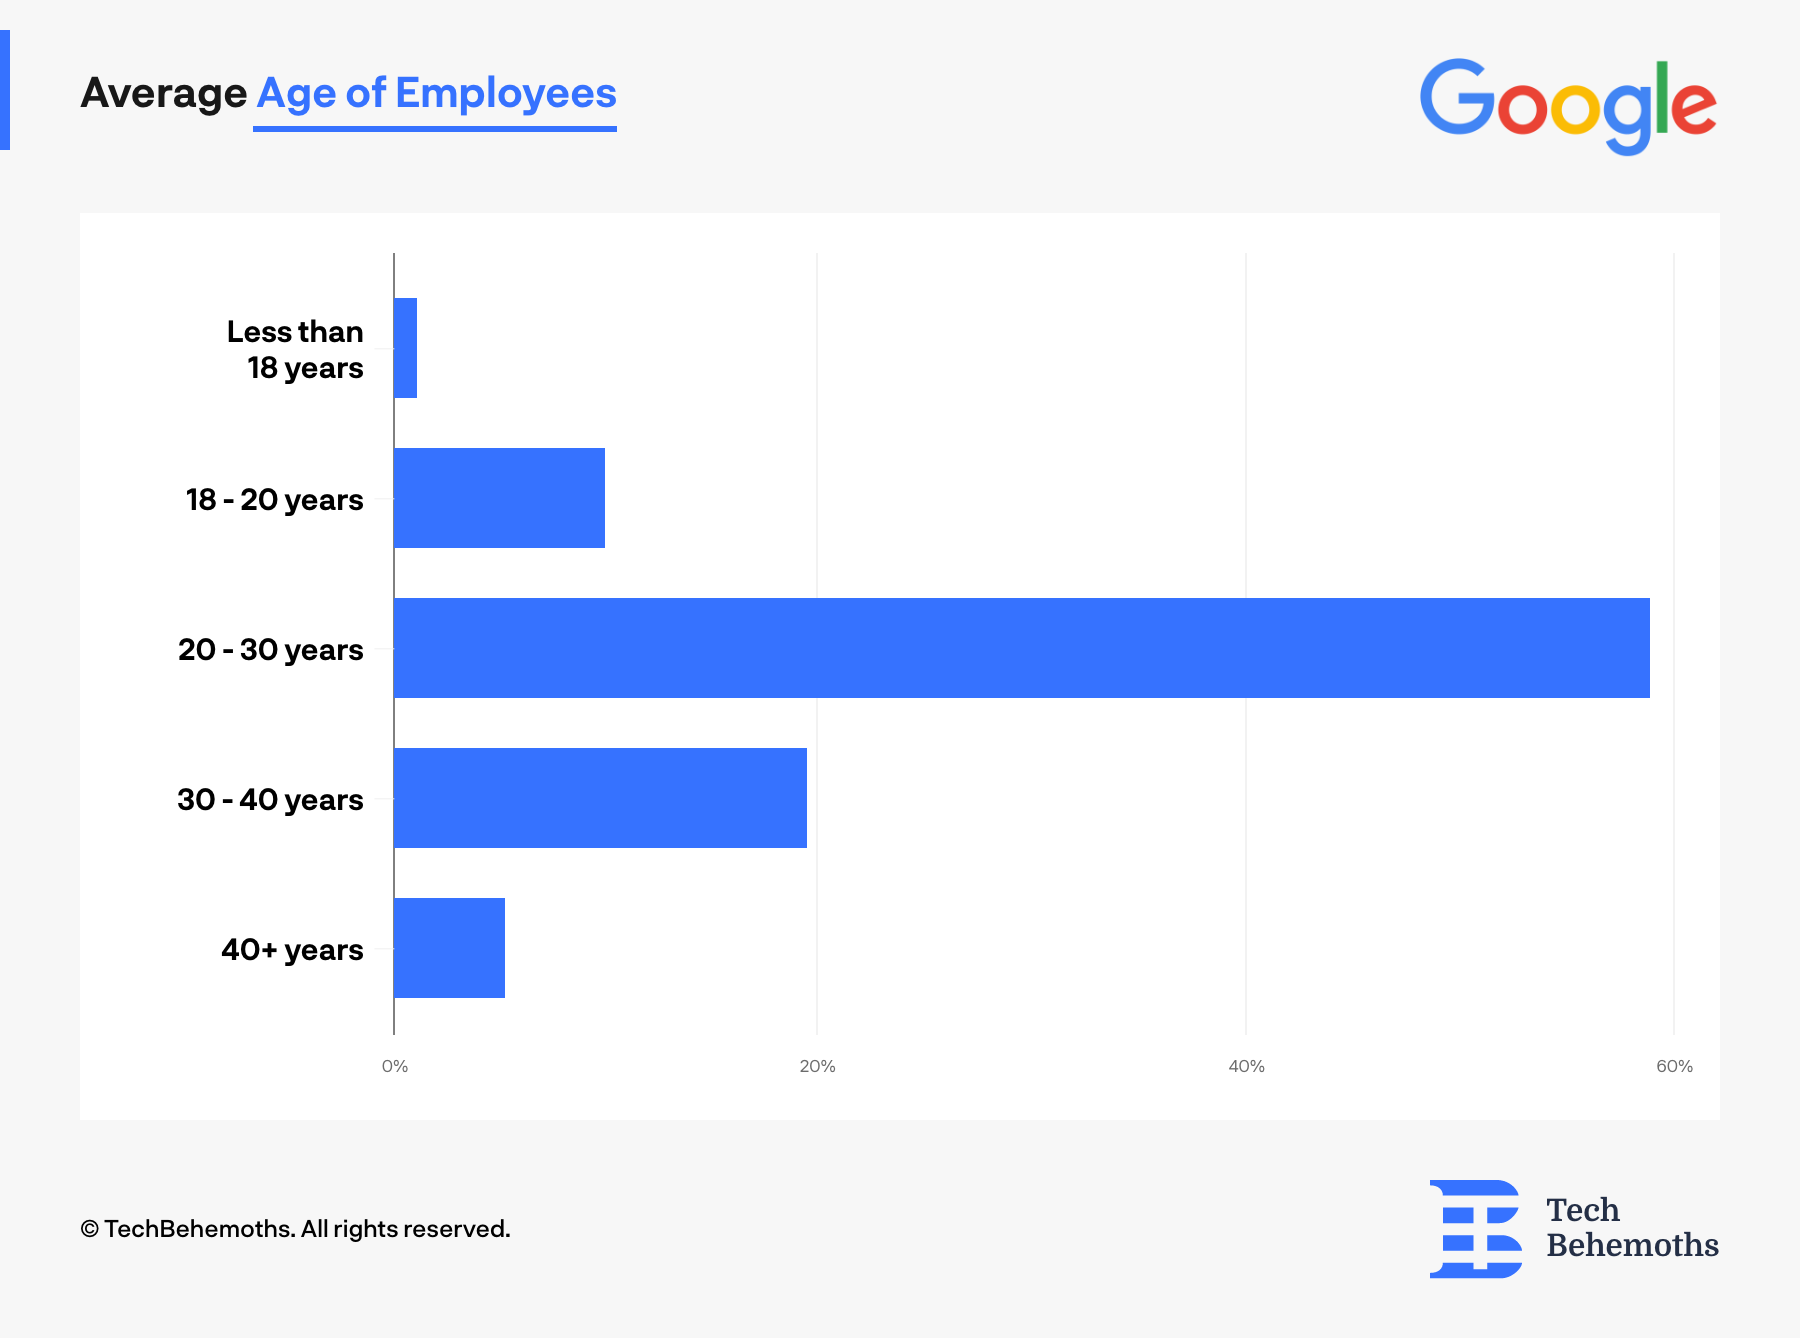 Average Age of Employees at Google